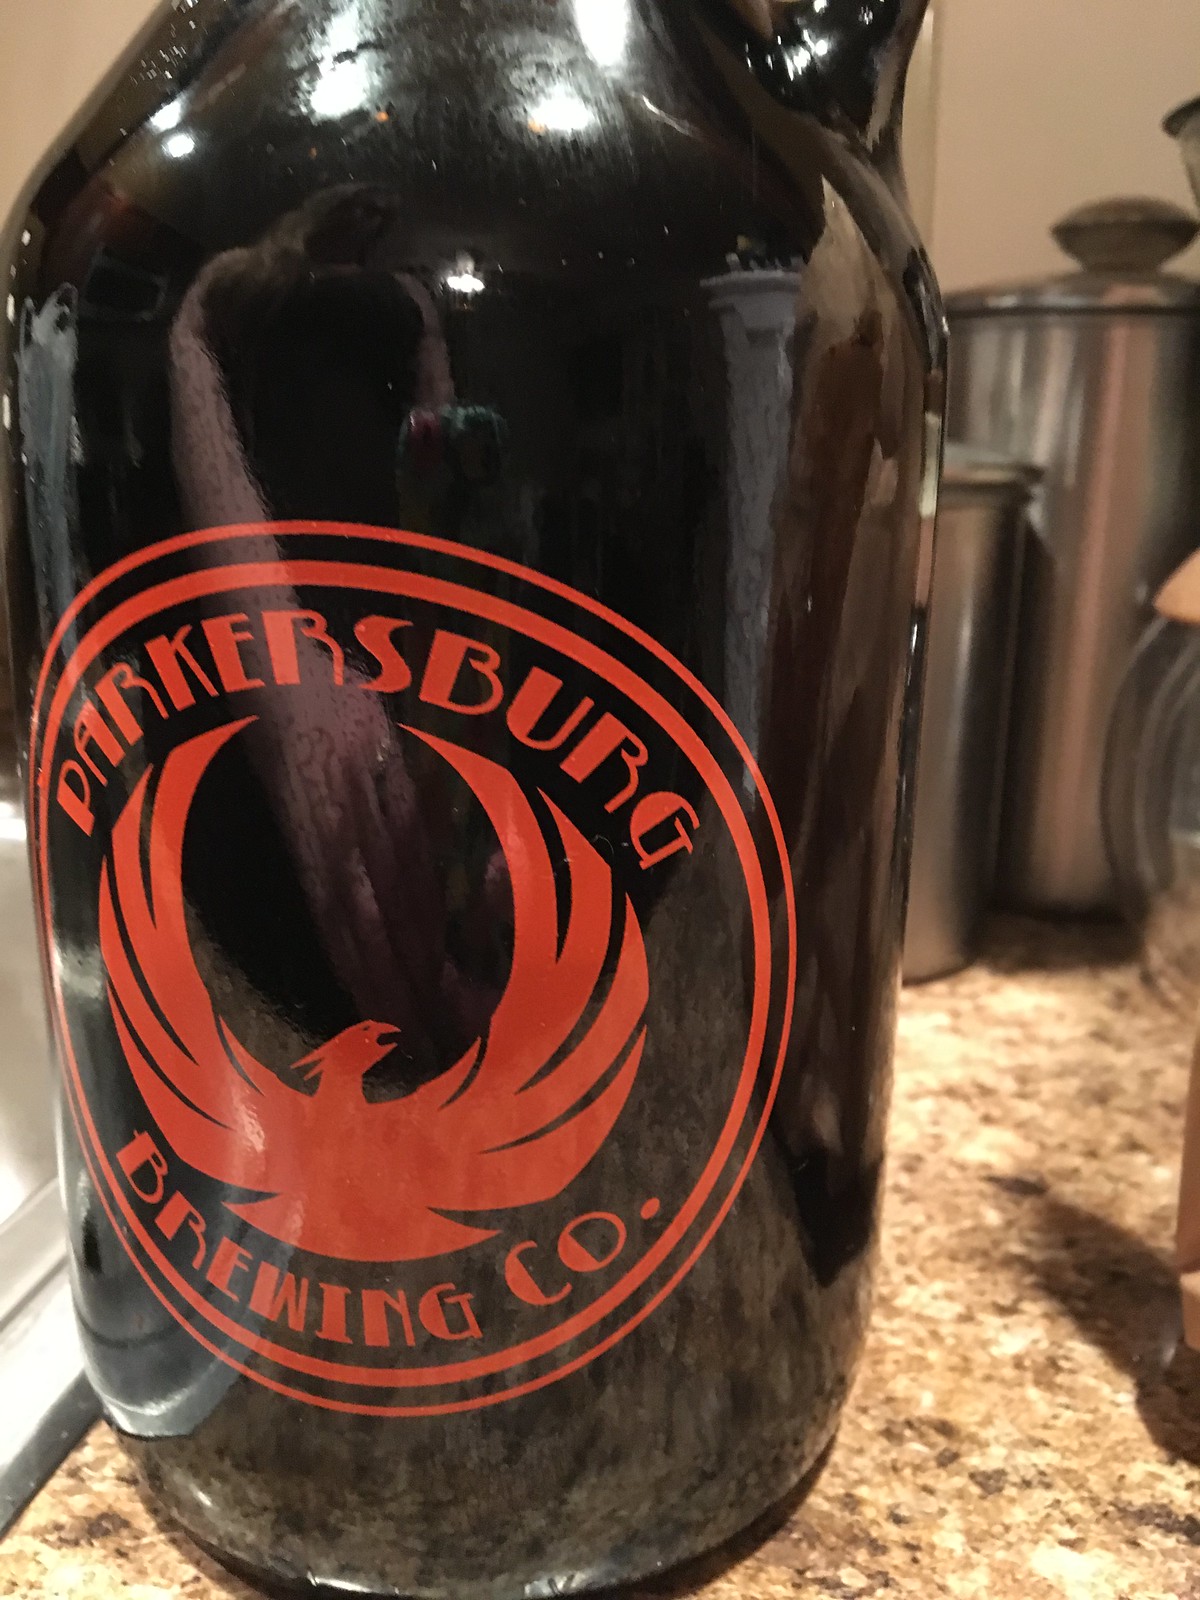 Parkersburg Brewing Co